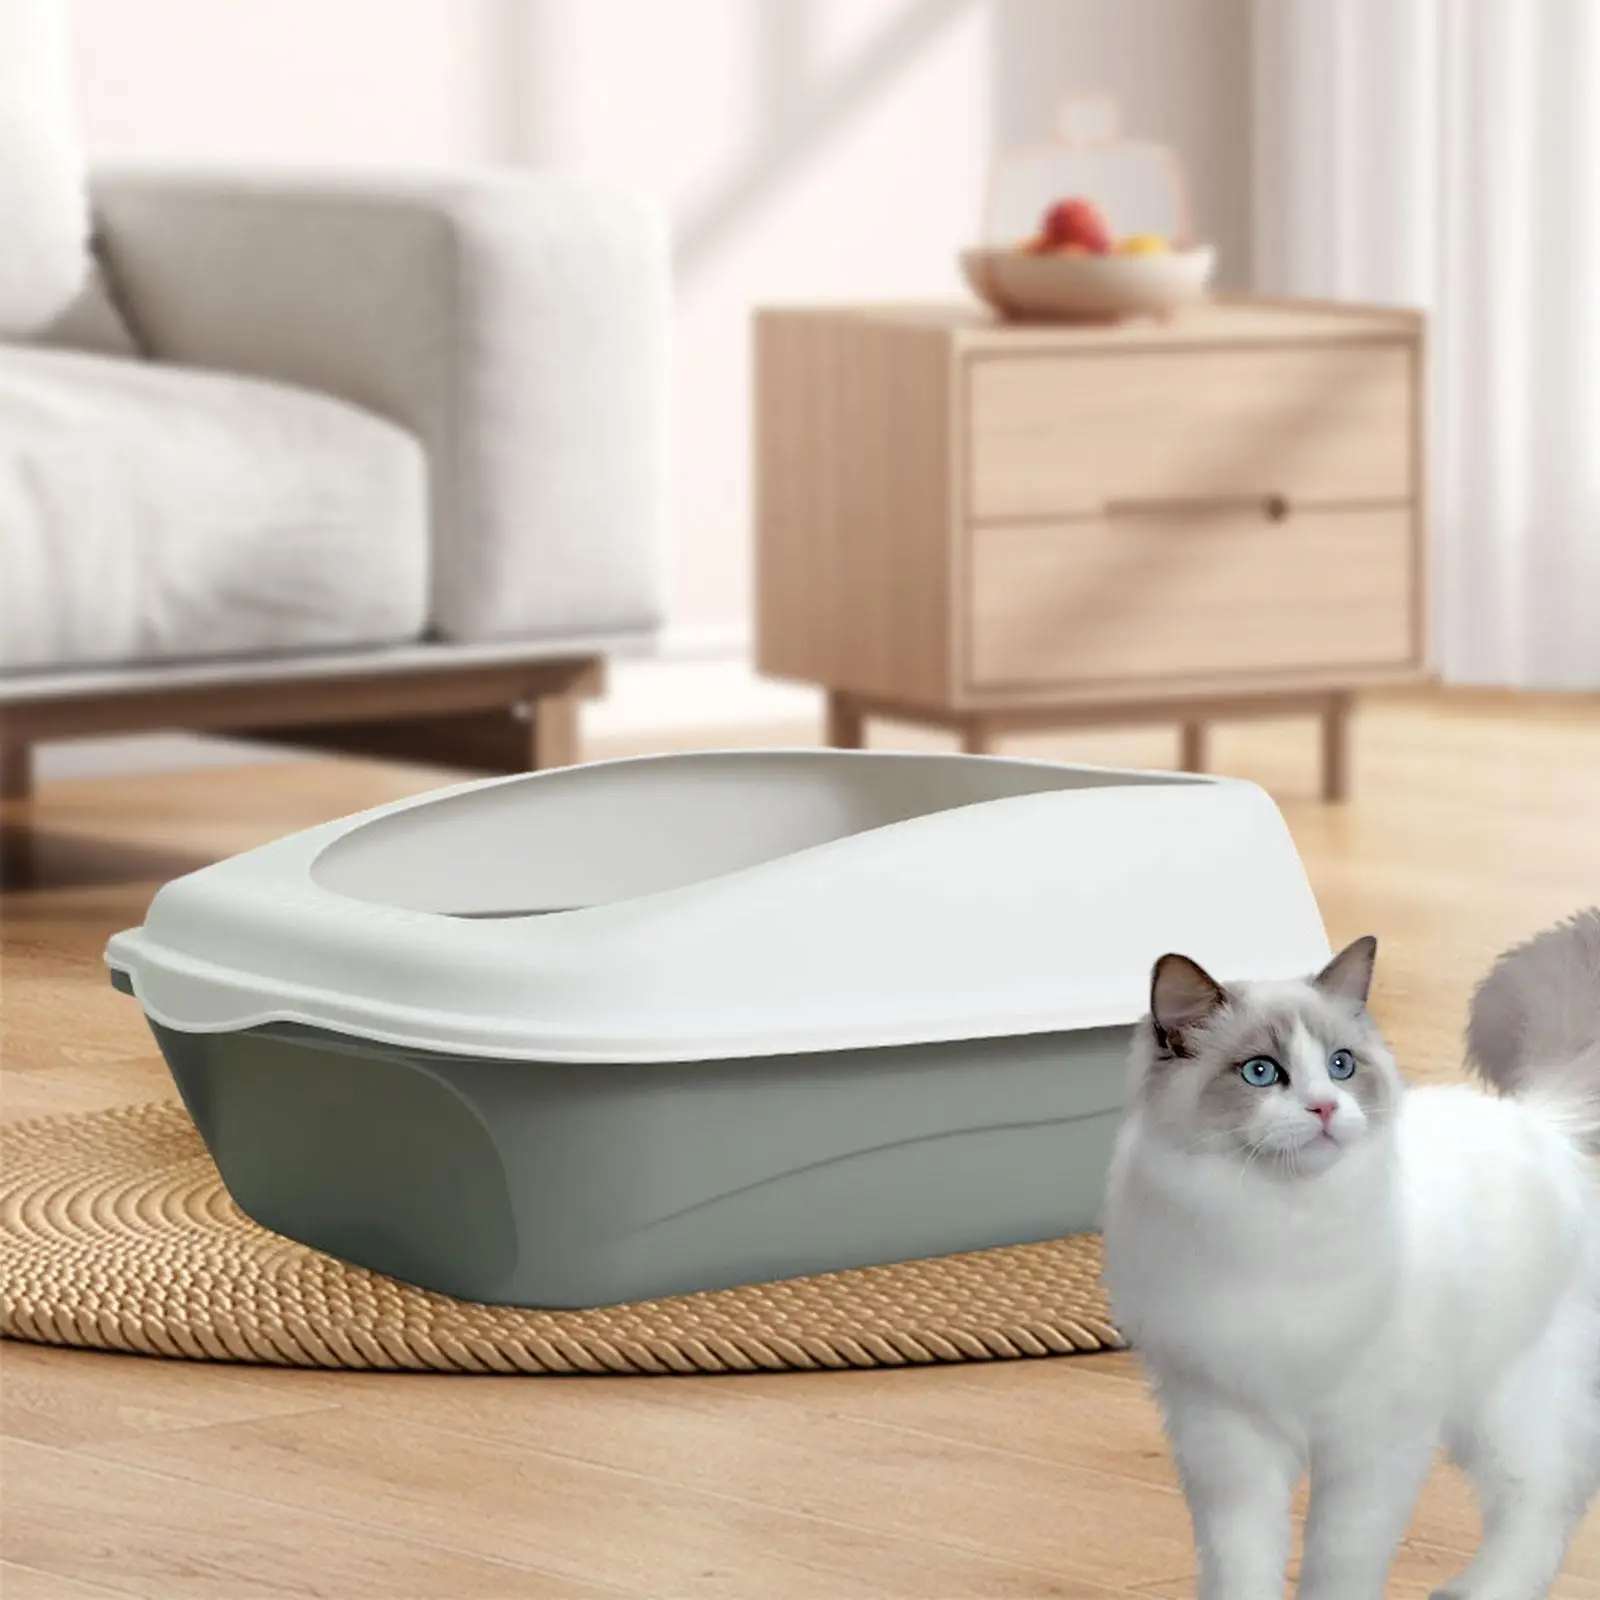 Open Cats Toilet Cage Accessories Splashproof Kitten Potty Pans Pet Supplies for